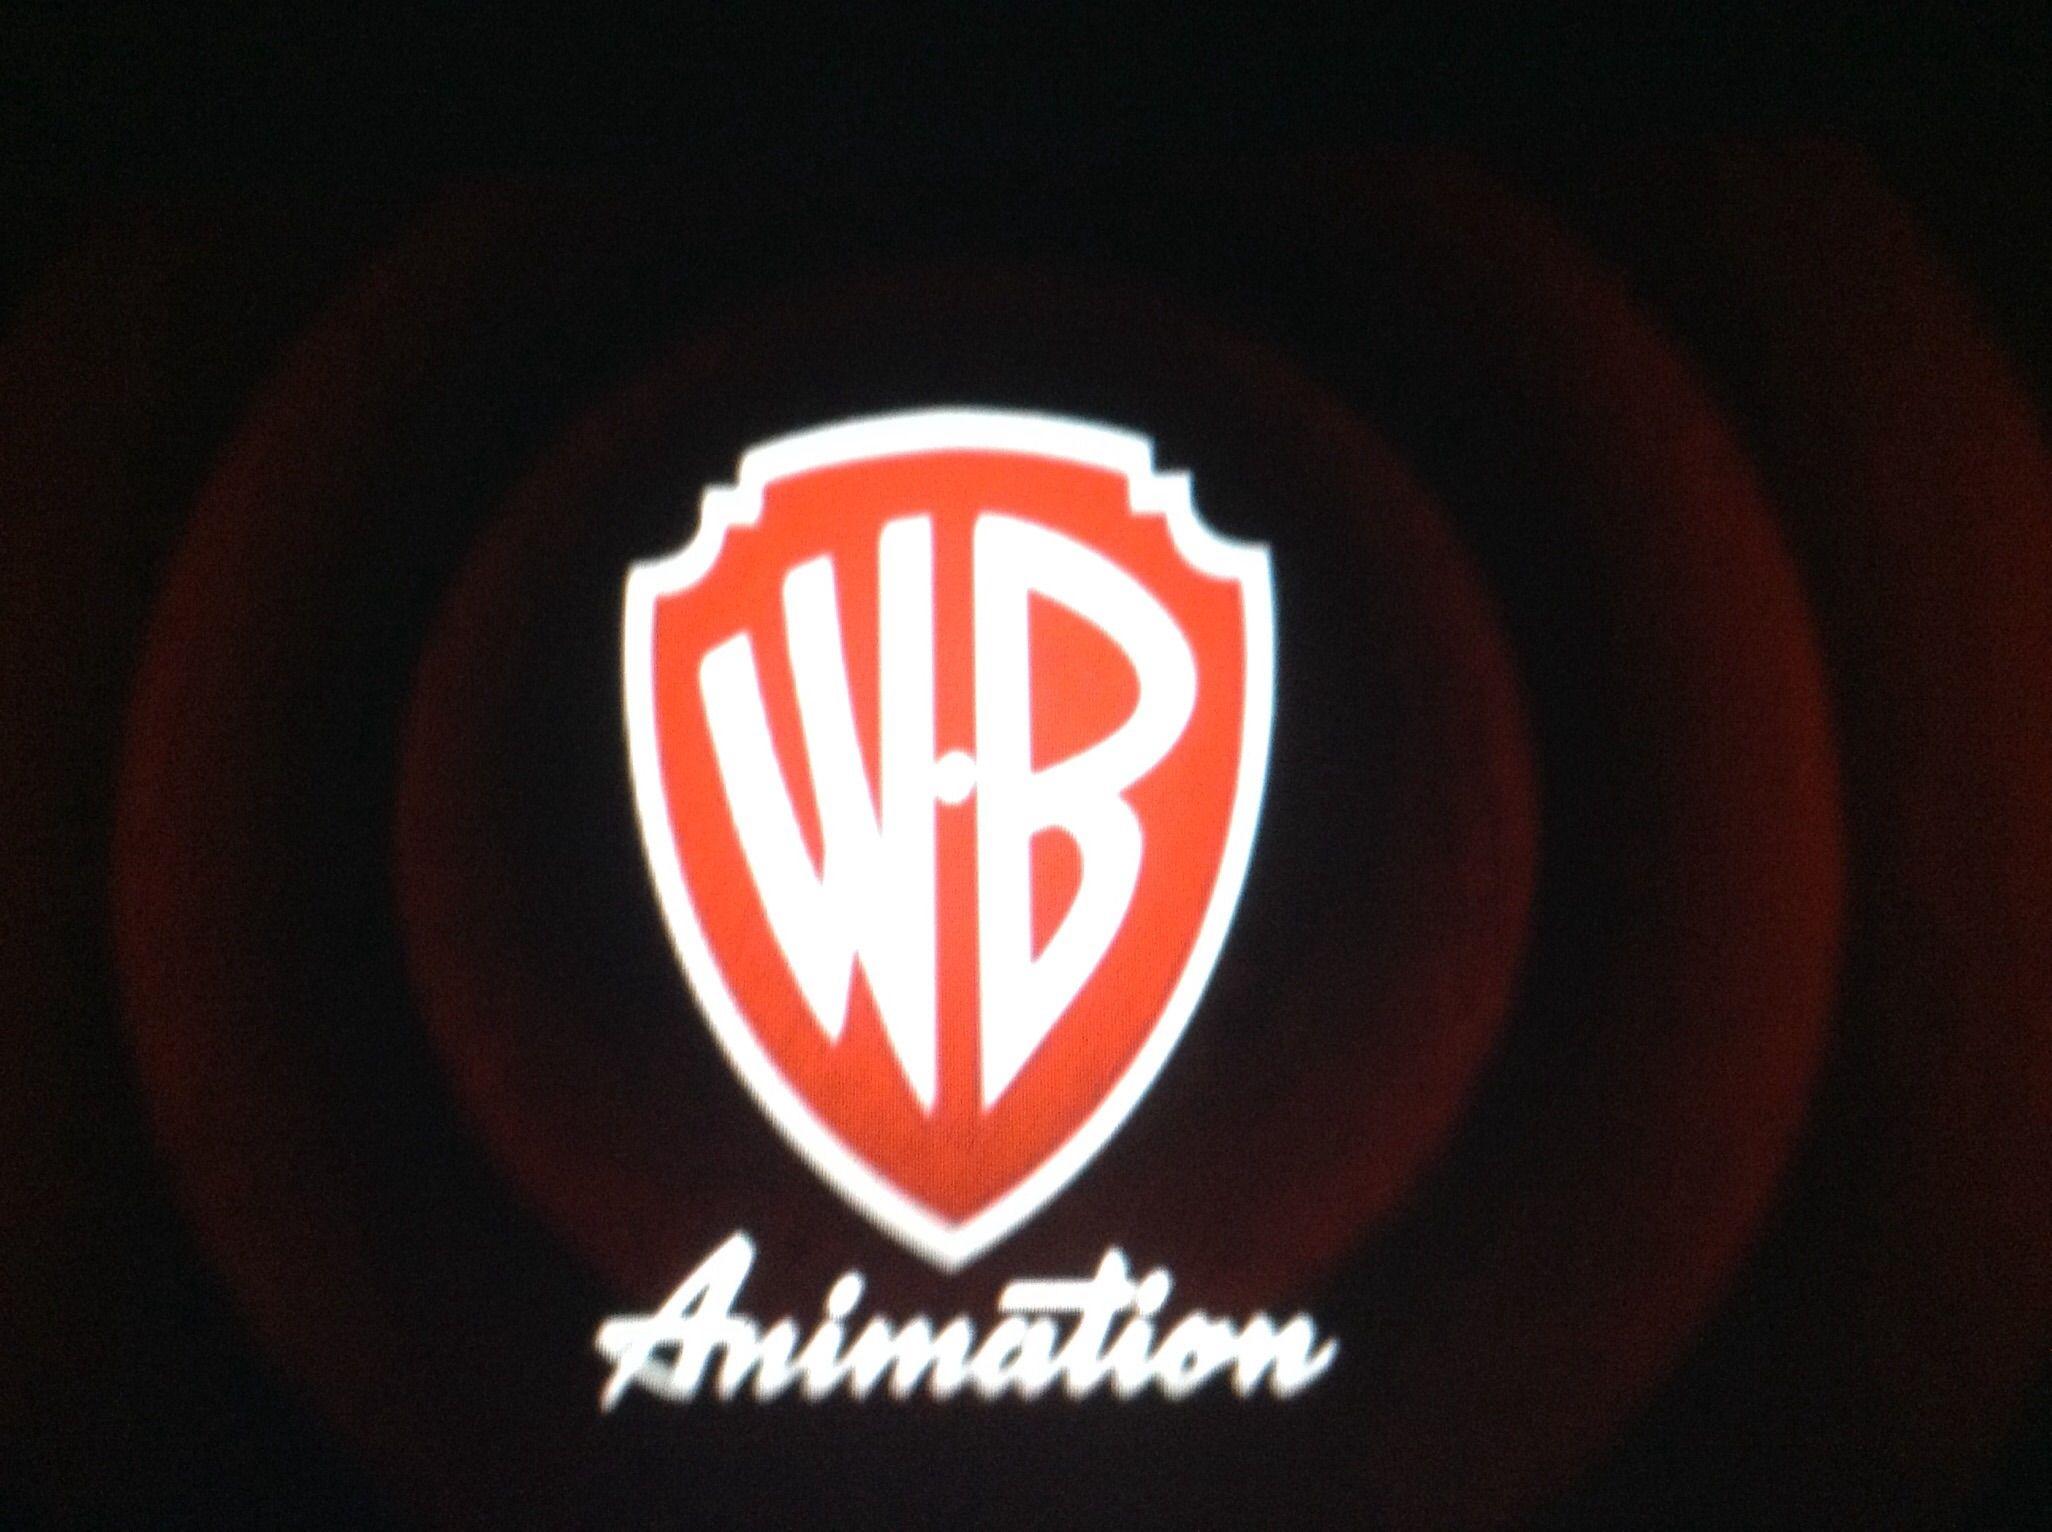 WB Animation Logo - Image - WB Animation logo.jpg | The Idea Wiki | FANDOM powered by Wikia